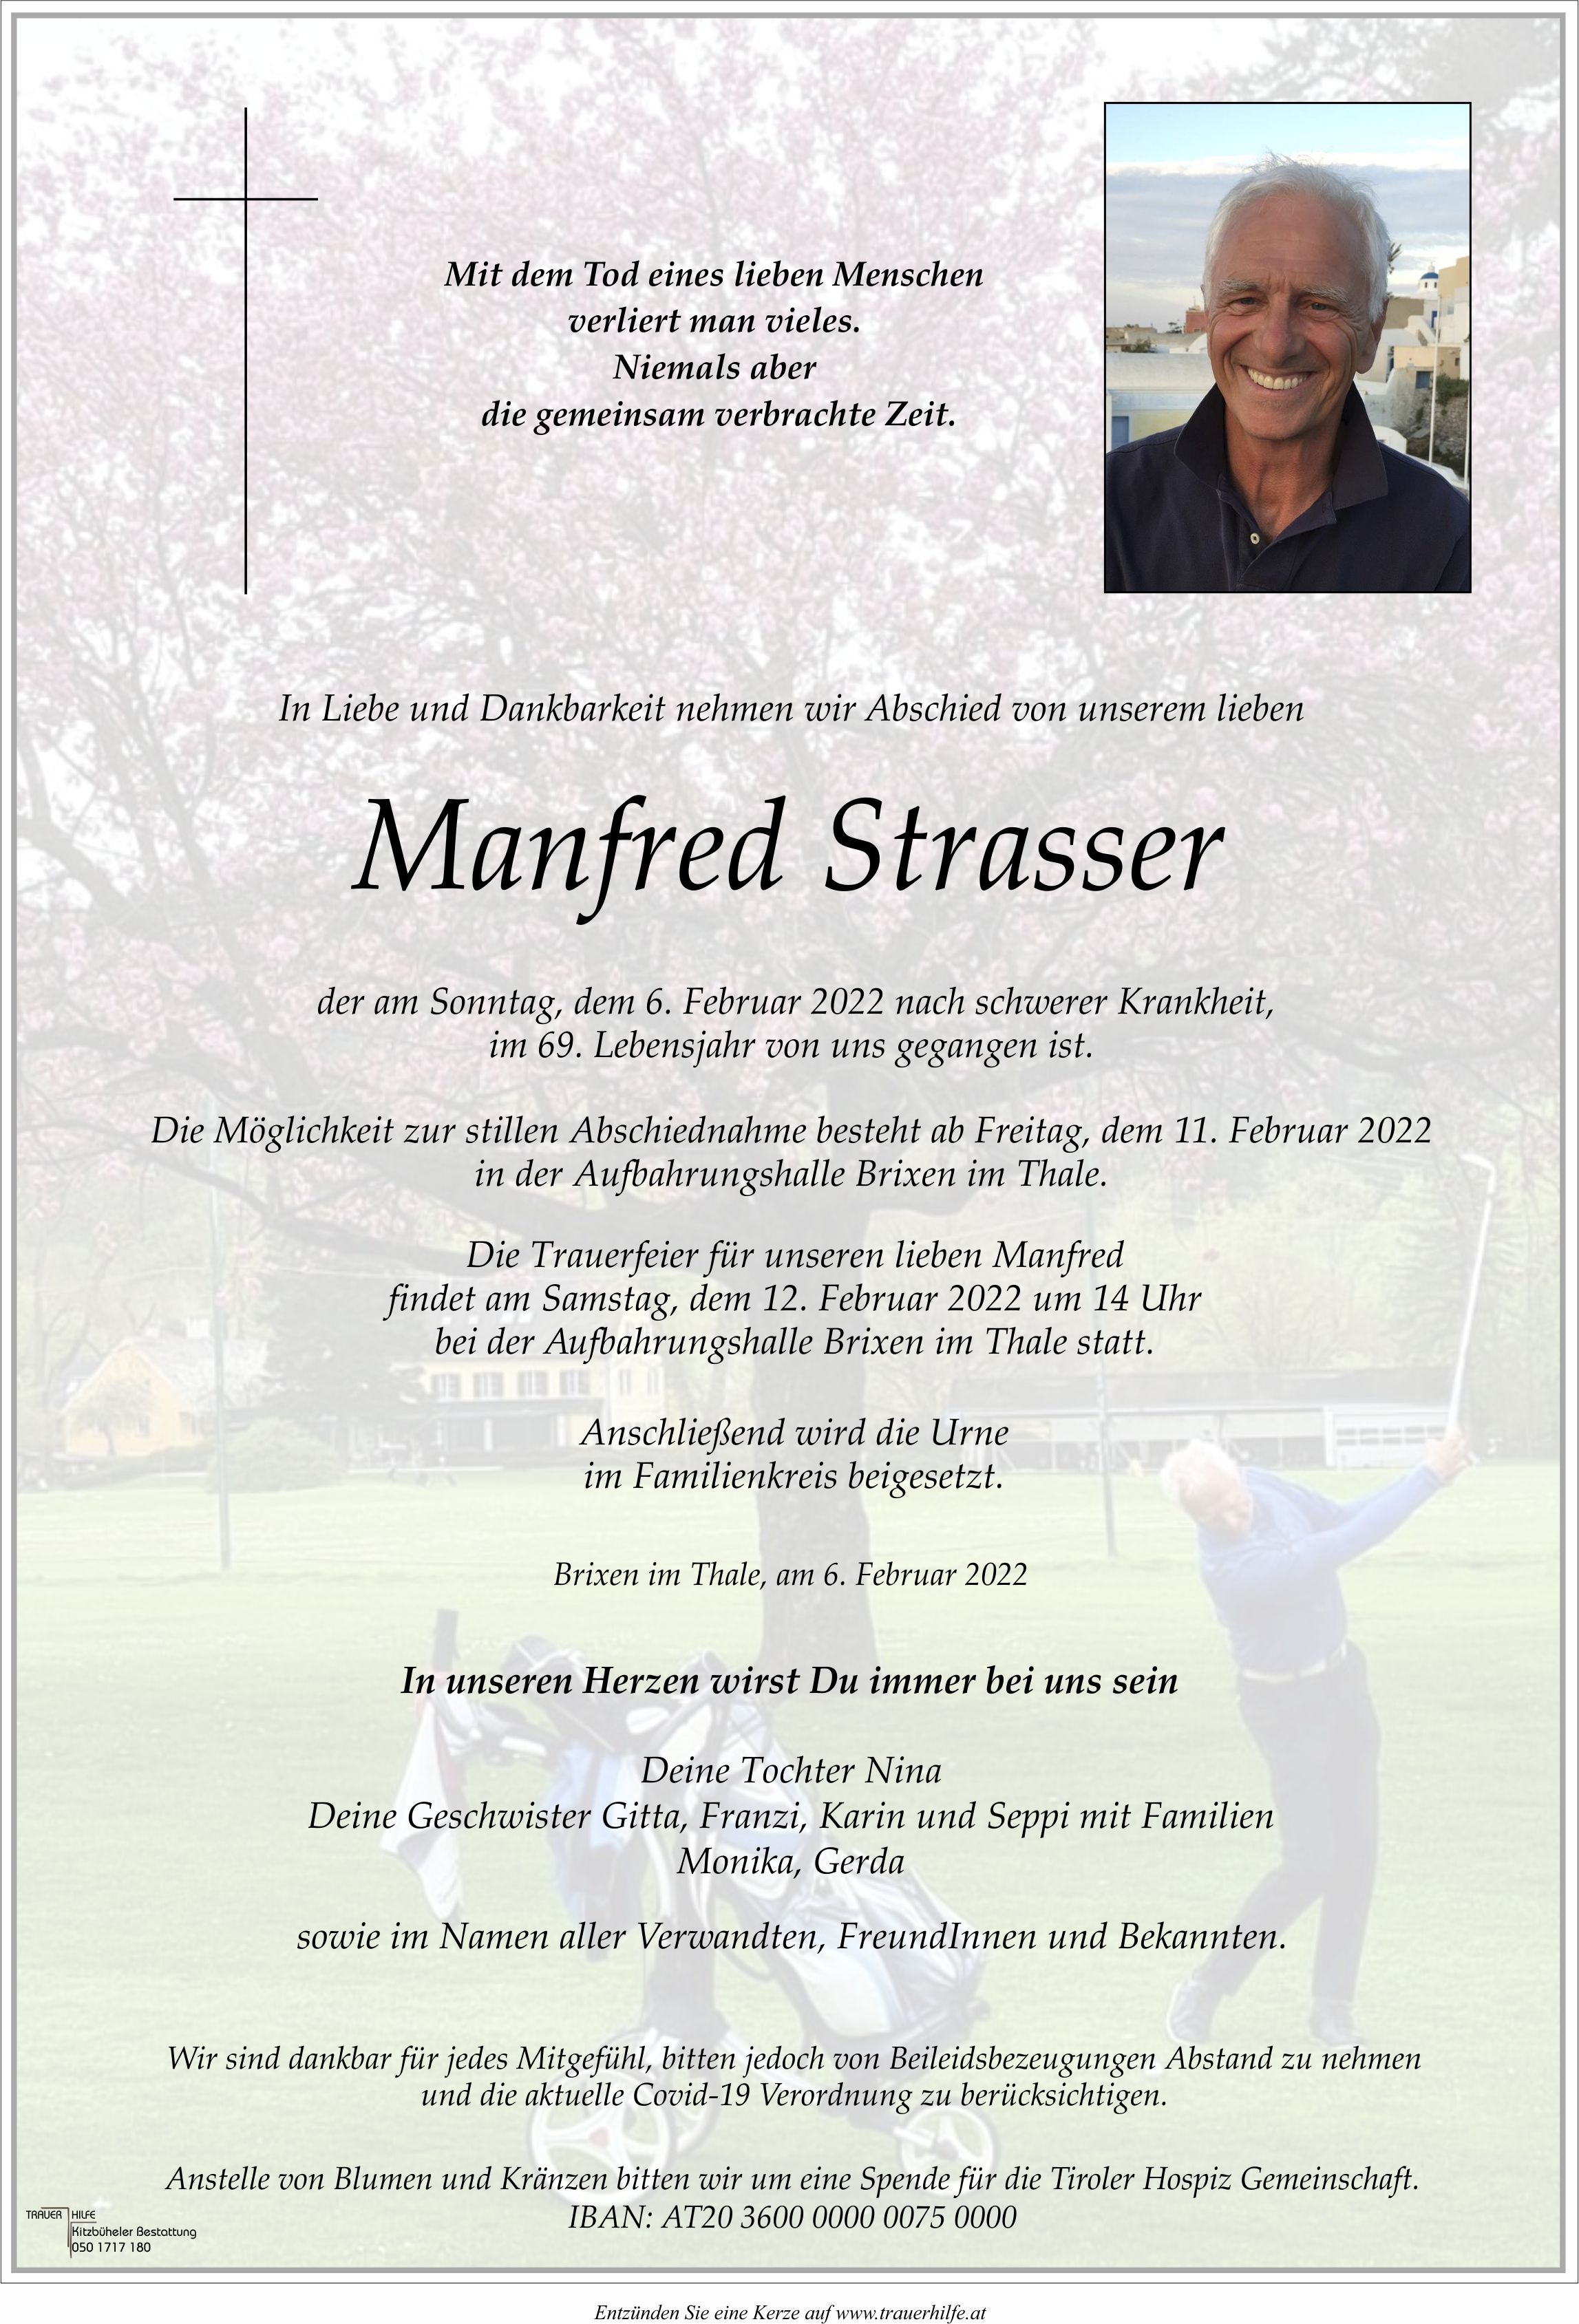 Manfred Strasser